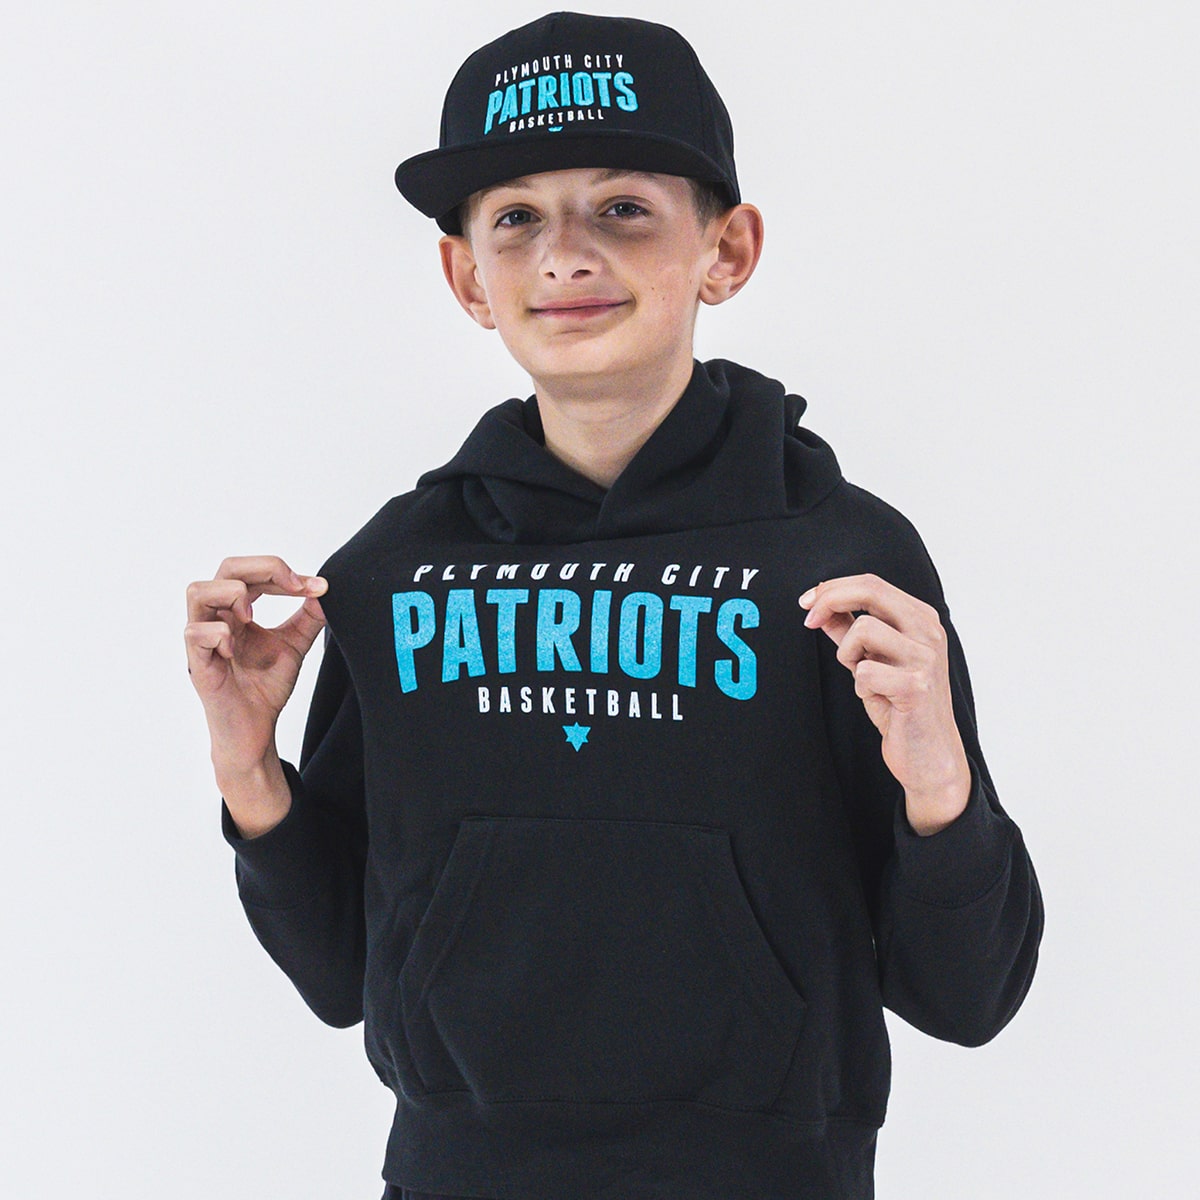 patriots youth hoodie